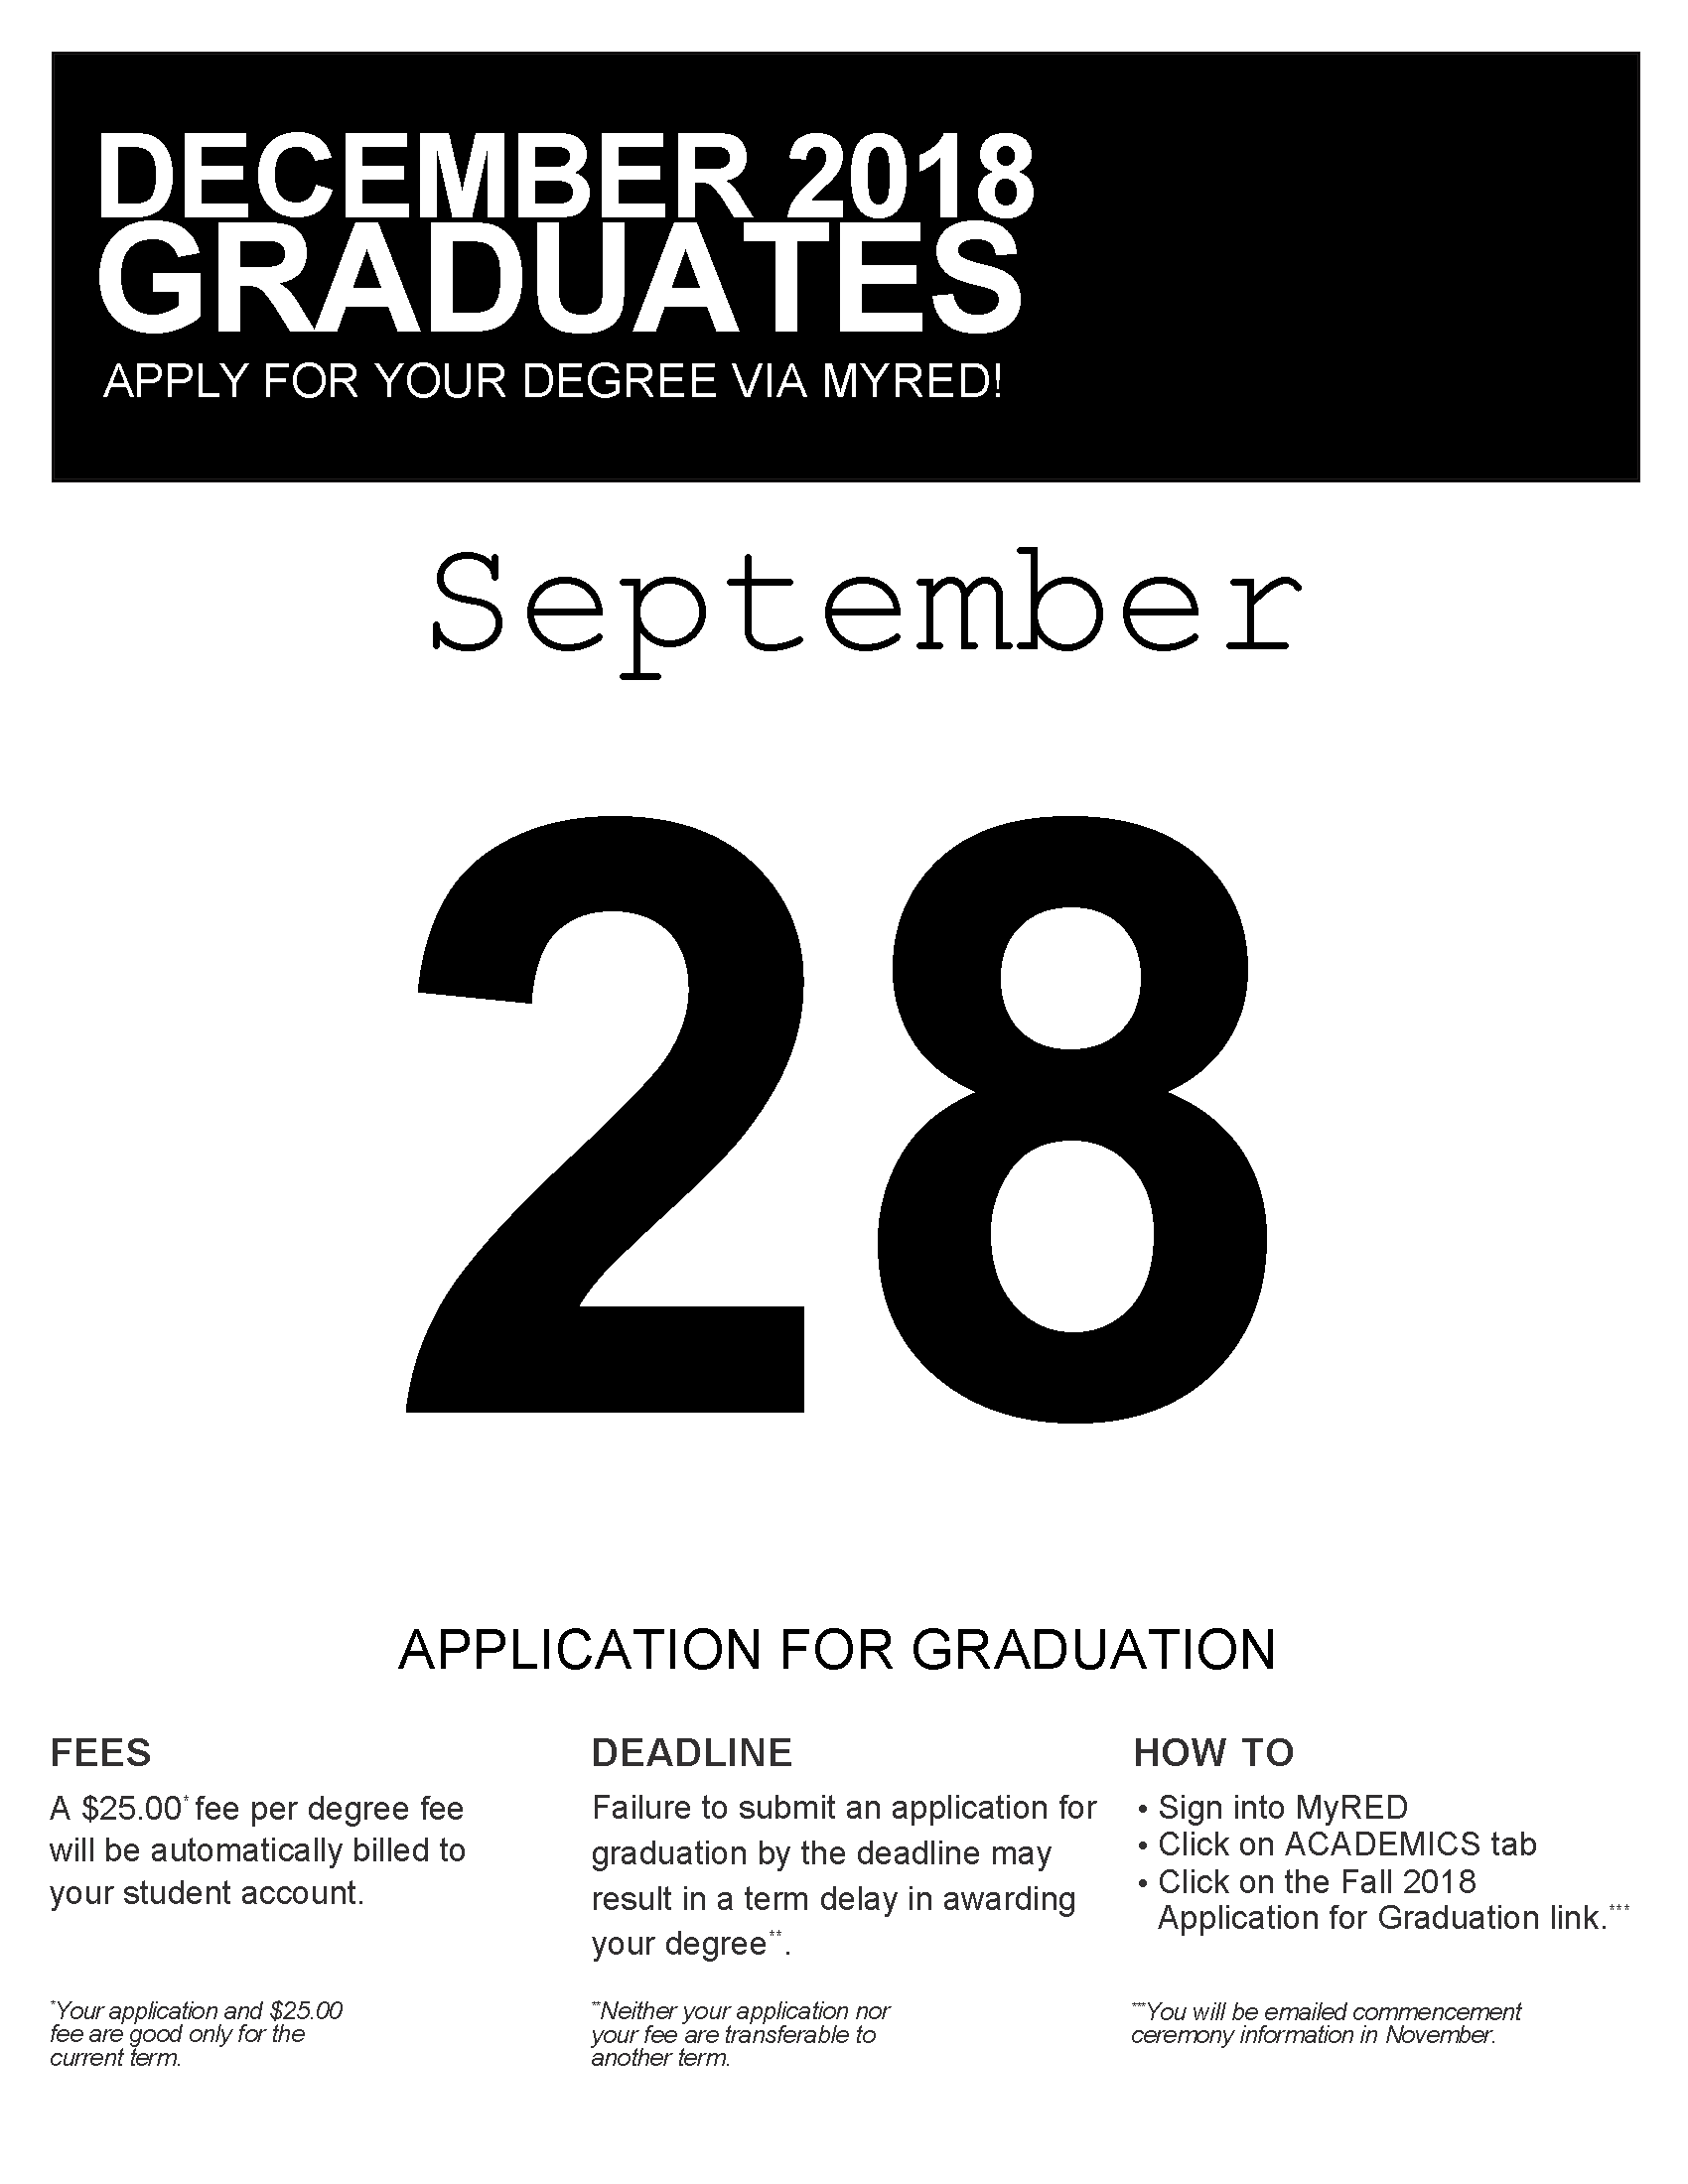 Graduation application deadline is September 28